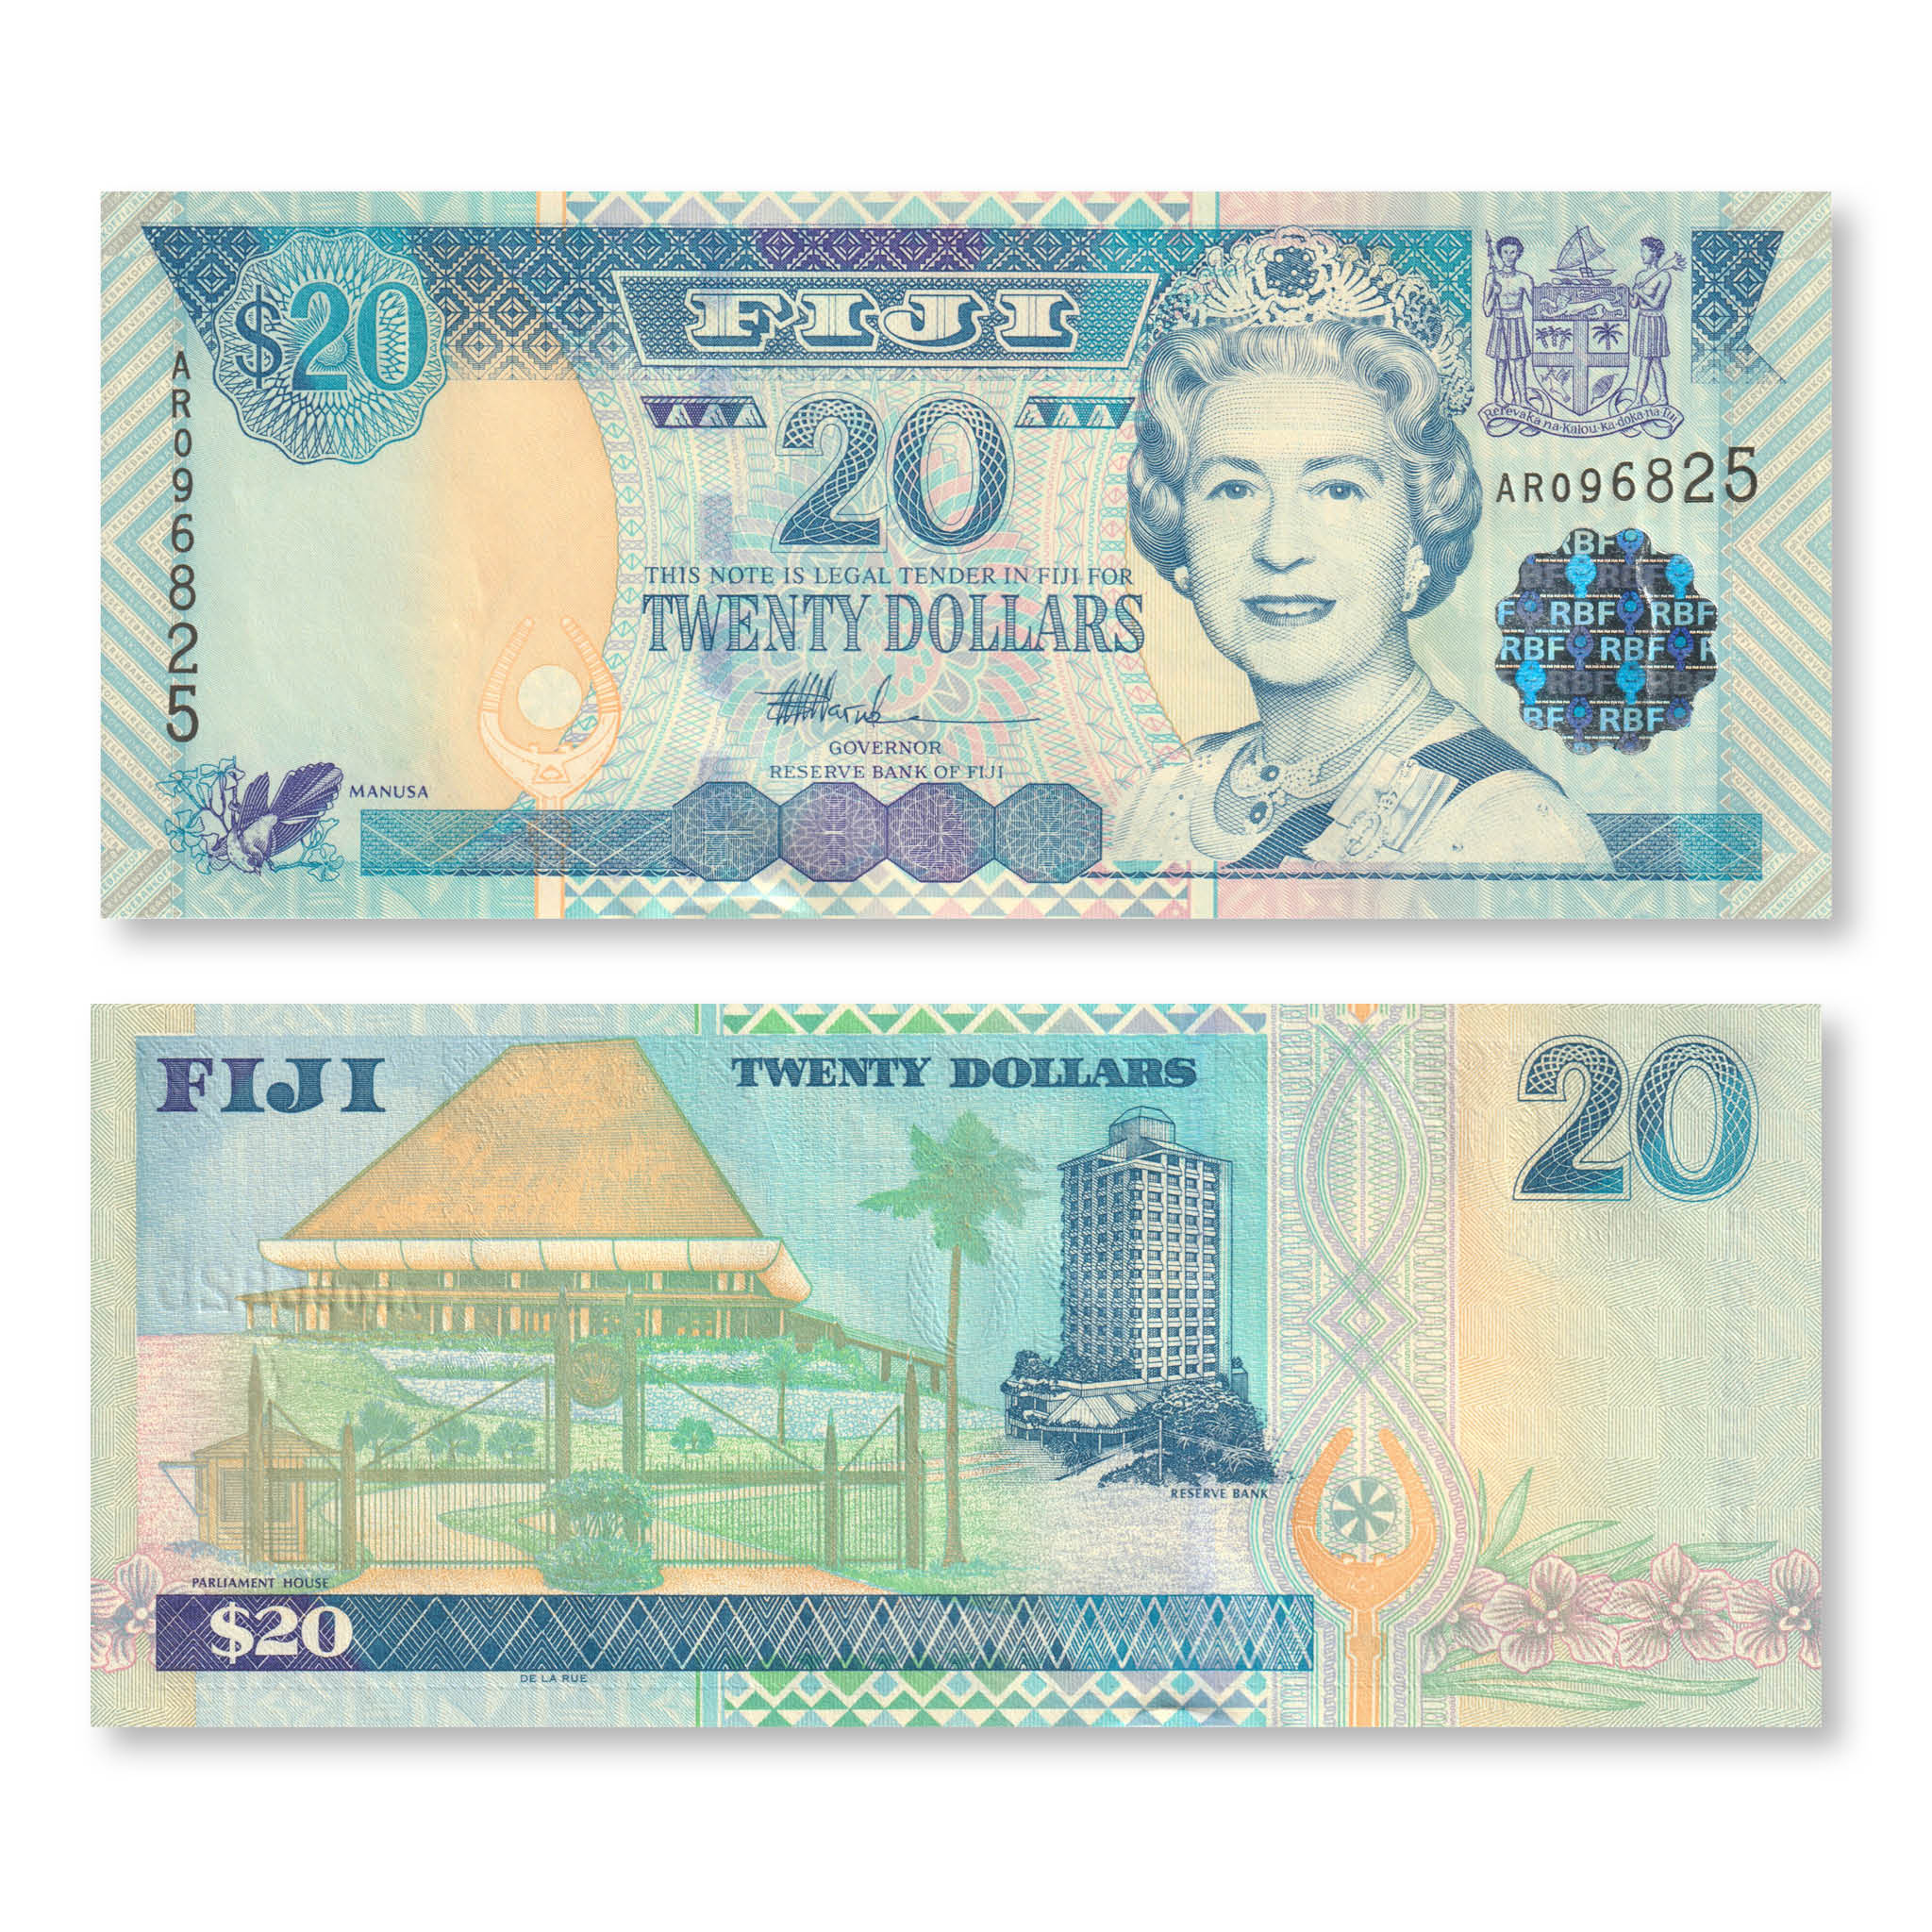 Fiji 20 Dollars, 2002, B518a, P107a, UNC - Robert's World Money - World Banknotes